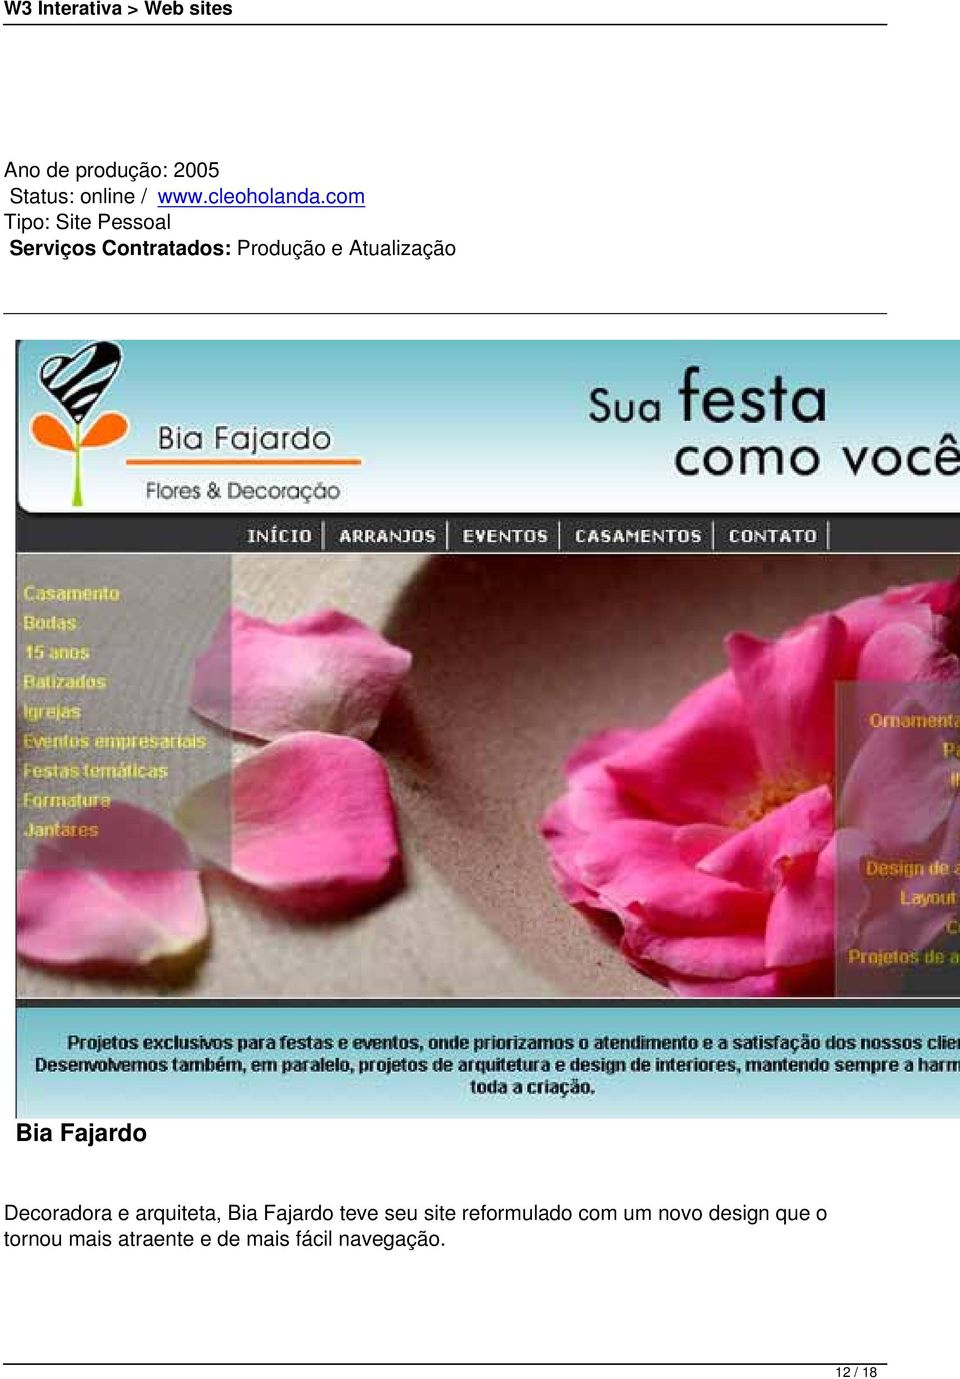 Bia Fajardo Decoradora e arquiteta, Bia Fajardo teve seu site